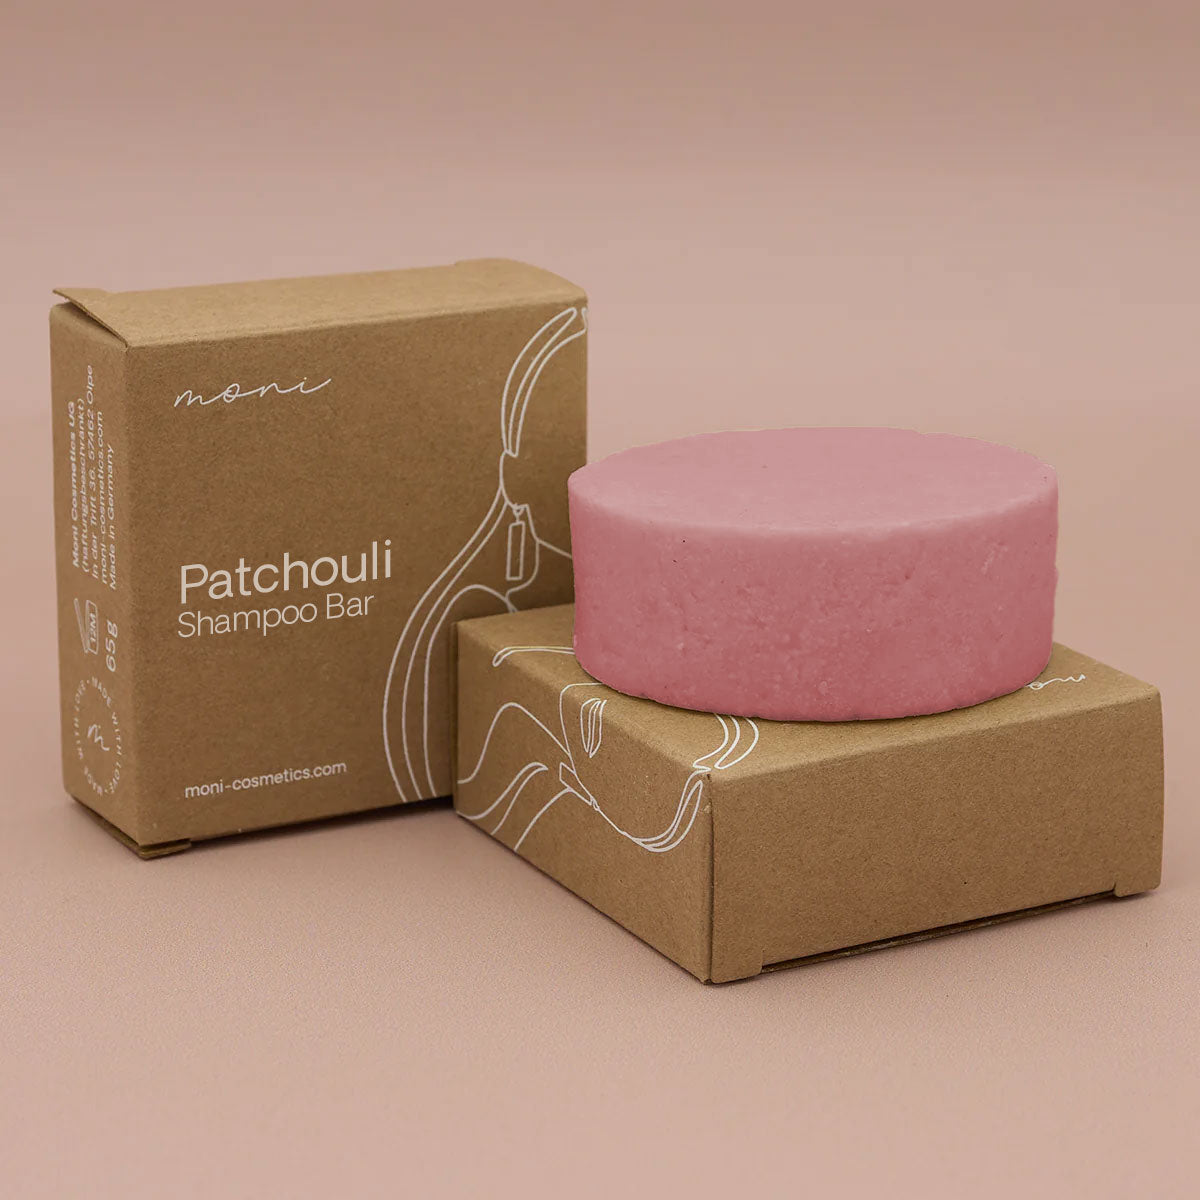 Patchouli Shampoo Bar